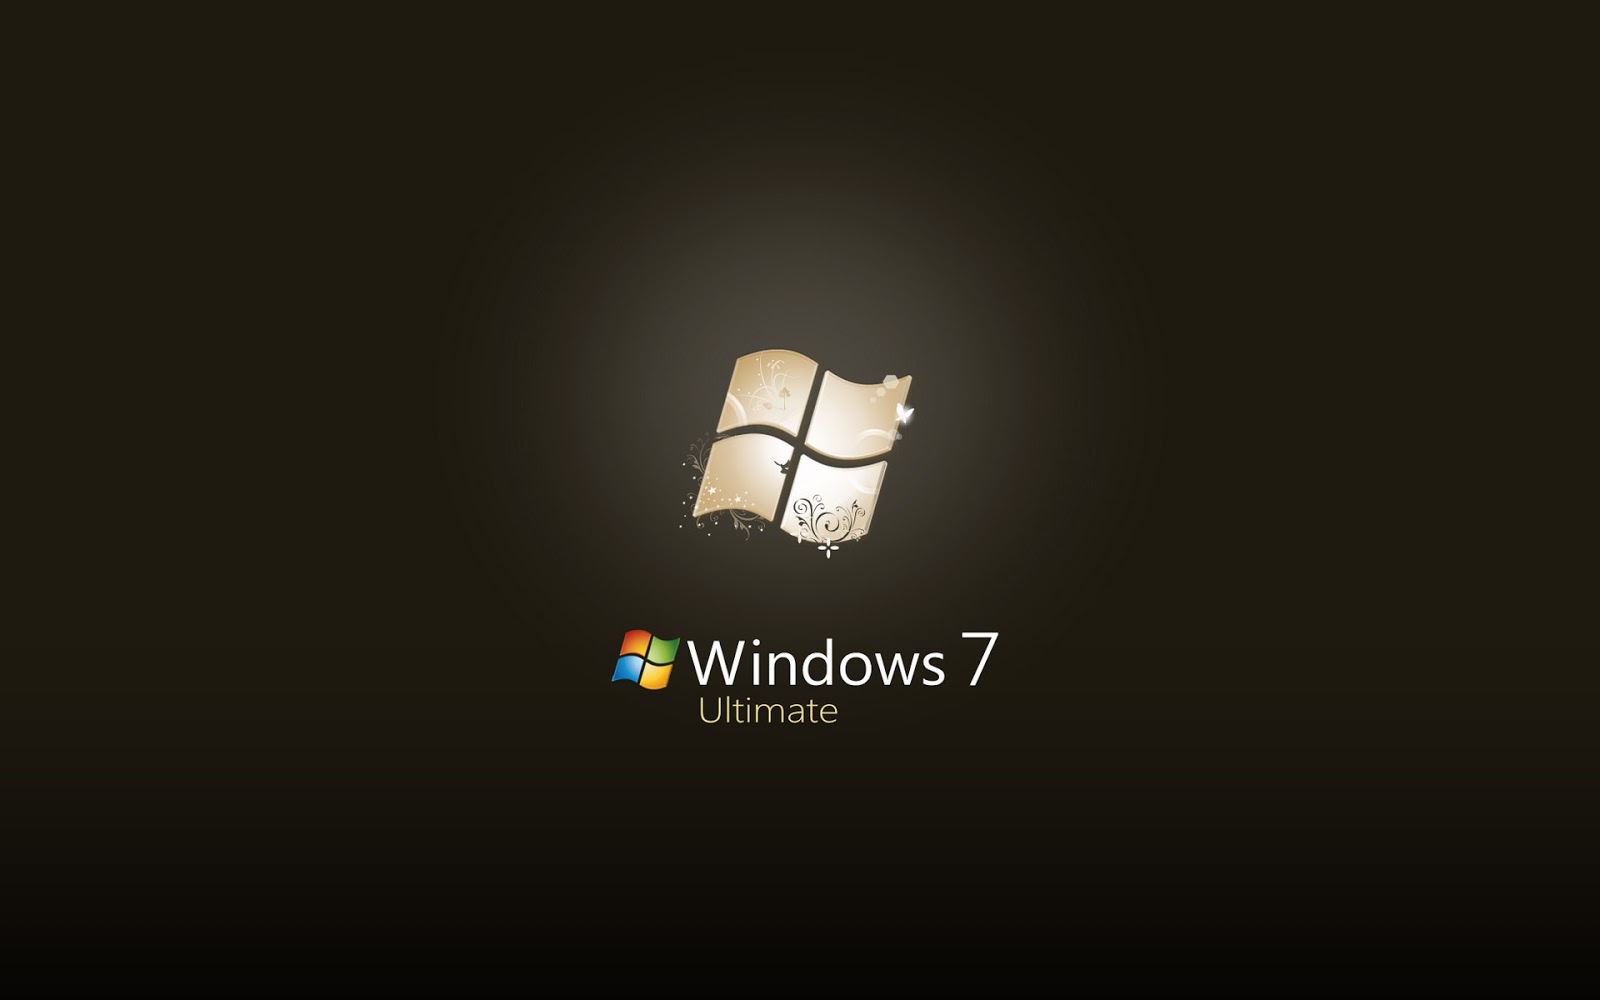 windows 7 sfondo nero,sistema operativo,testo,font,cielo,design